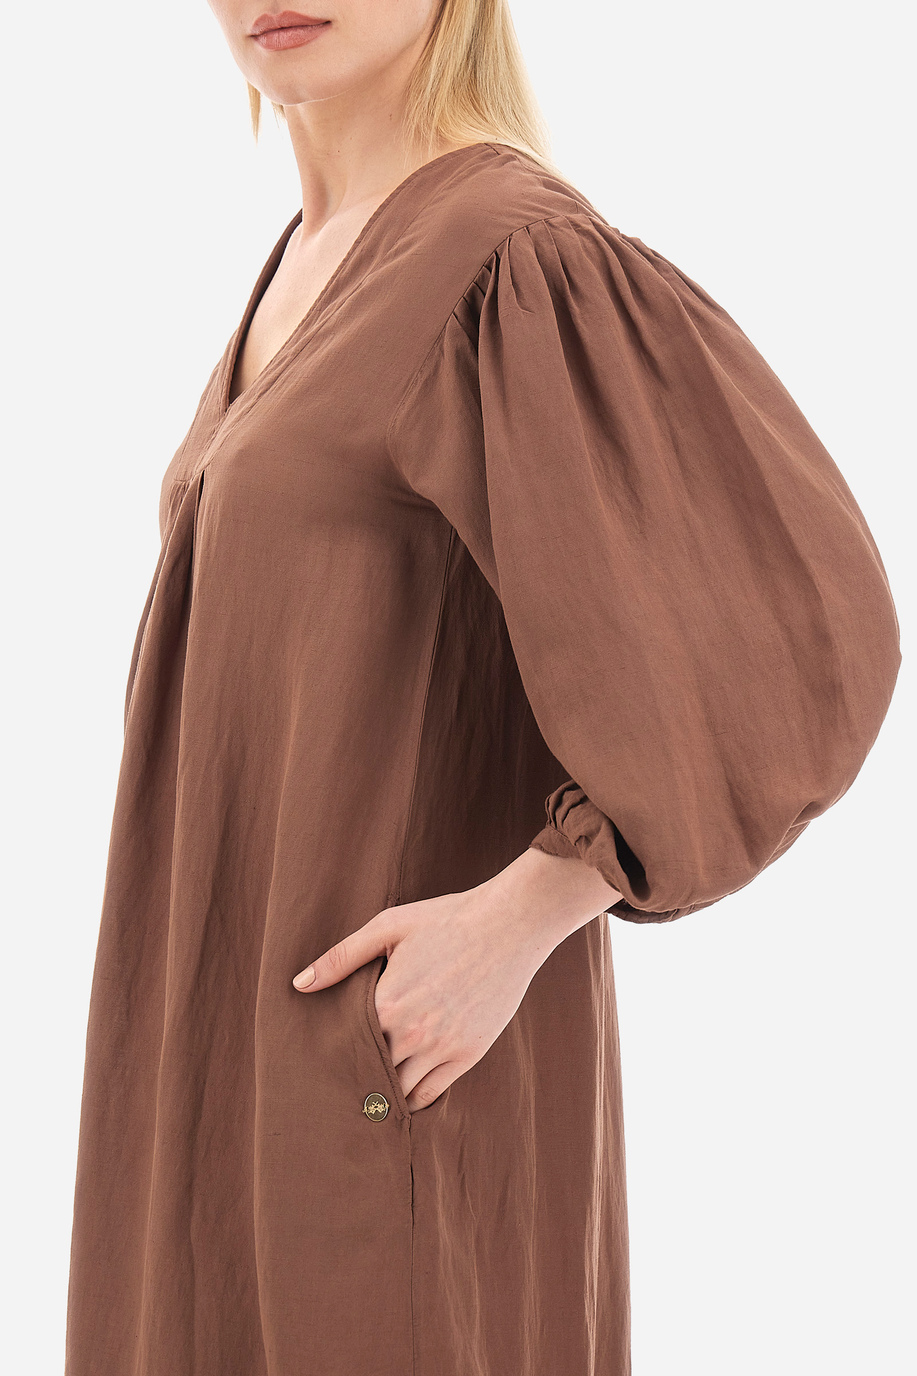 Robe femme en polylin, manches 3/4 - Valaria - Robes | La Martina - Official Online Shop